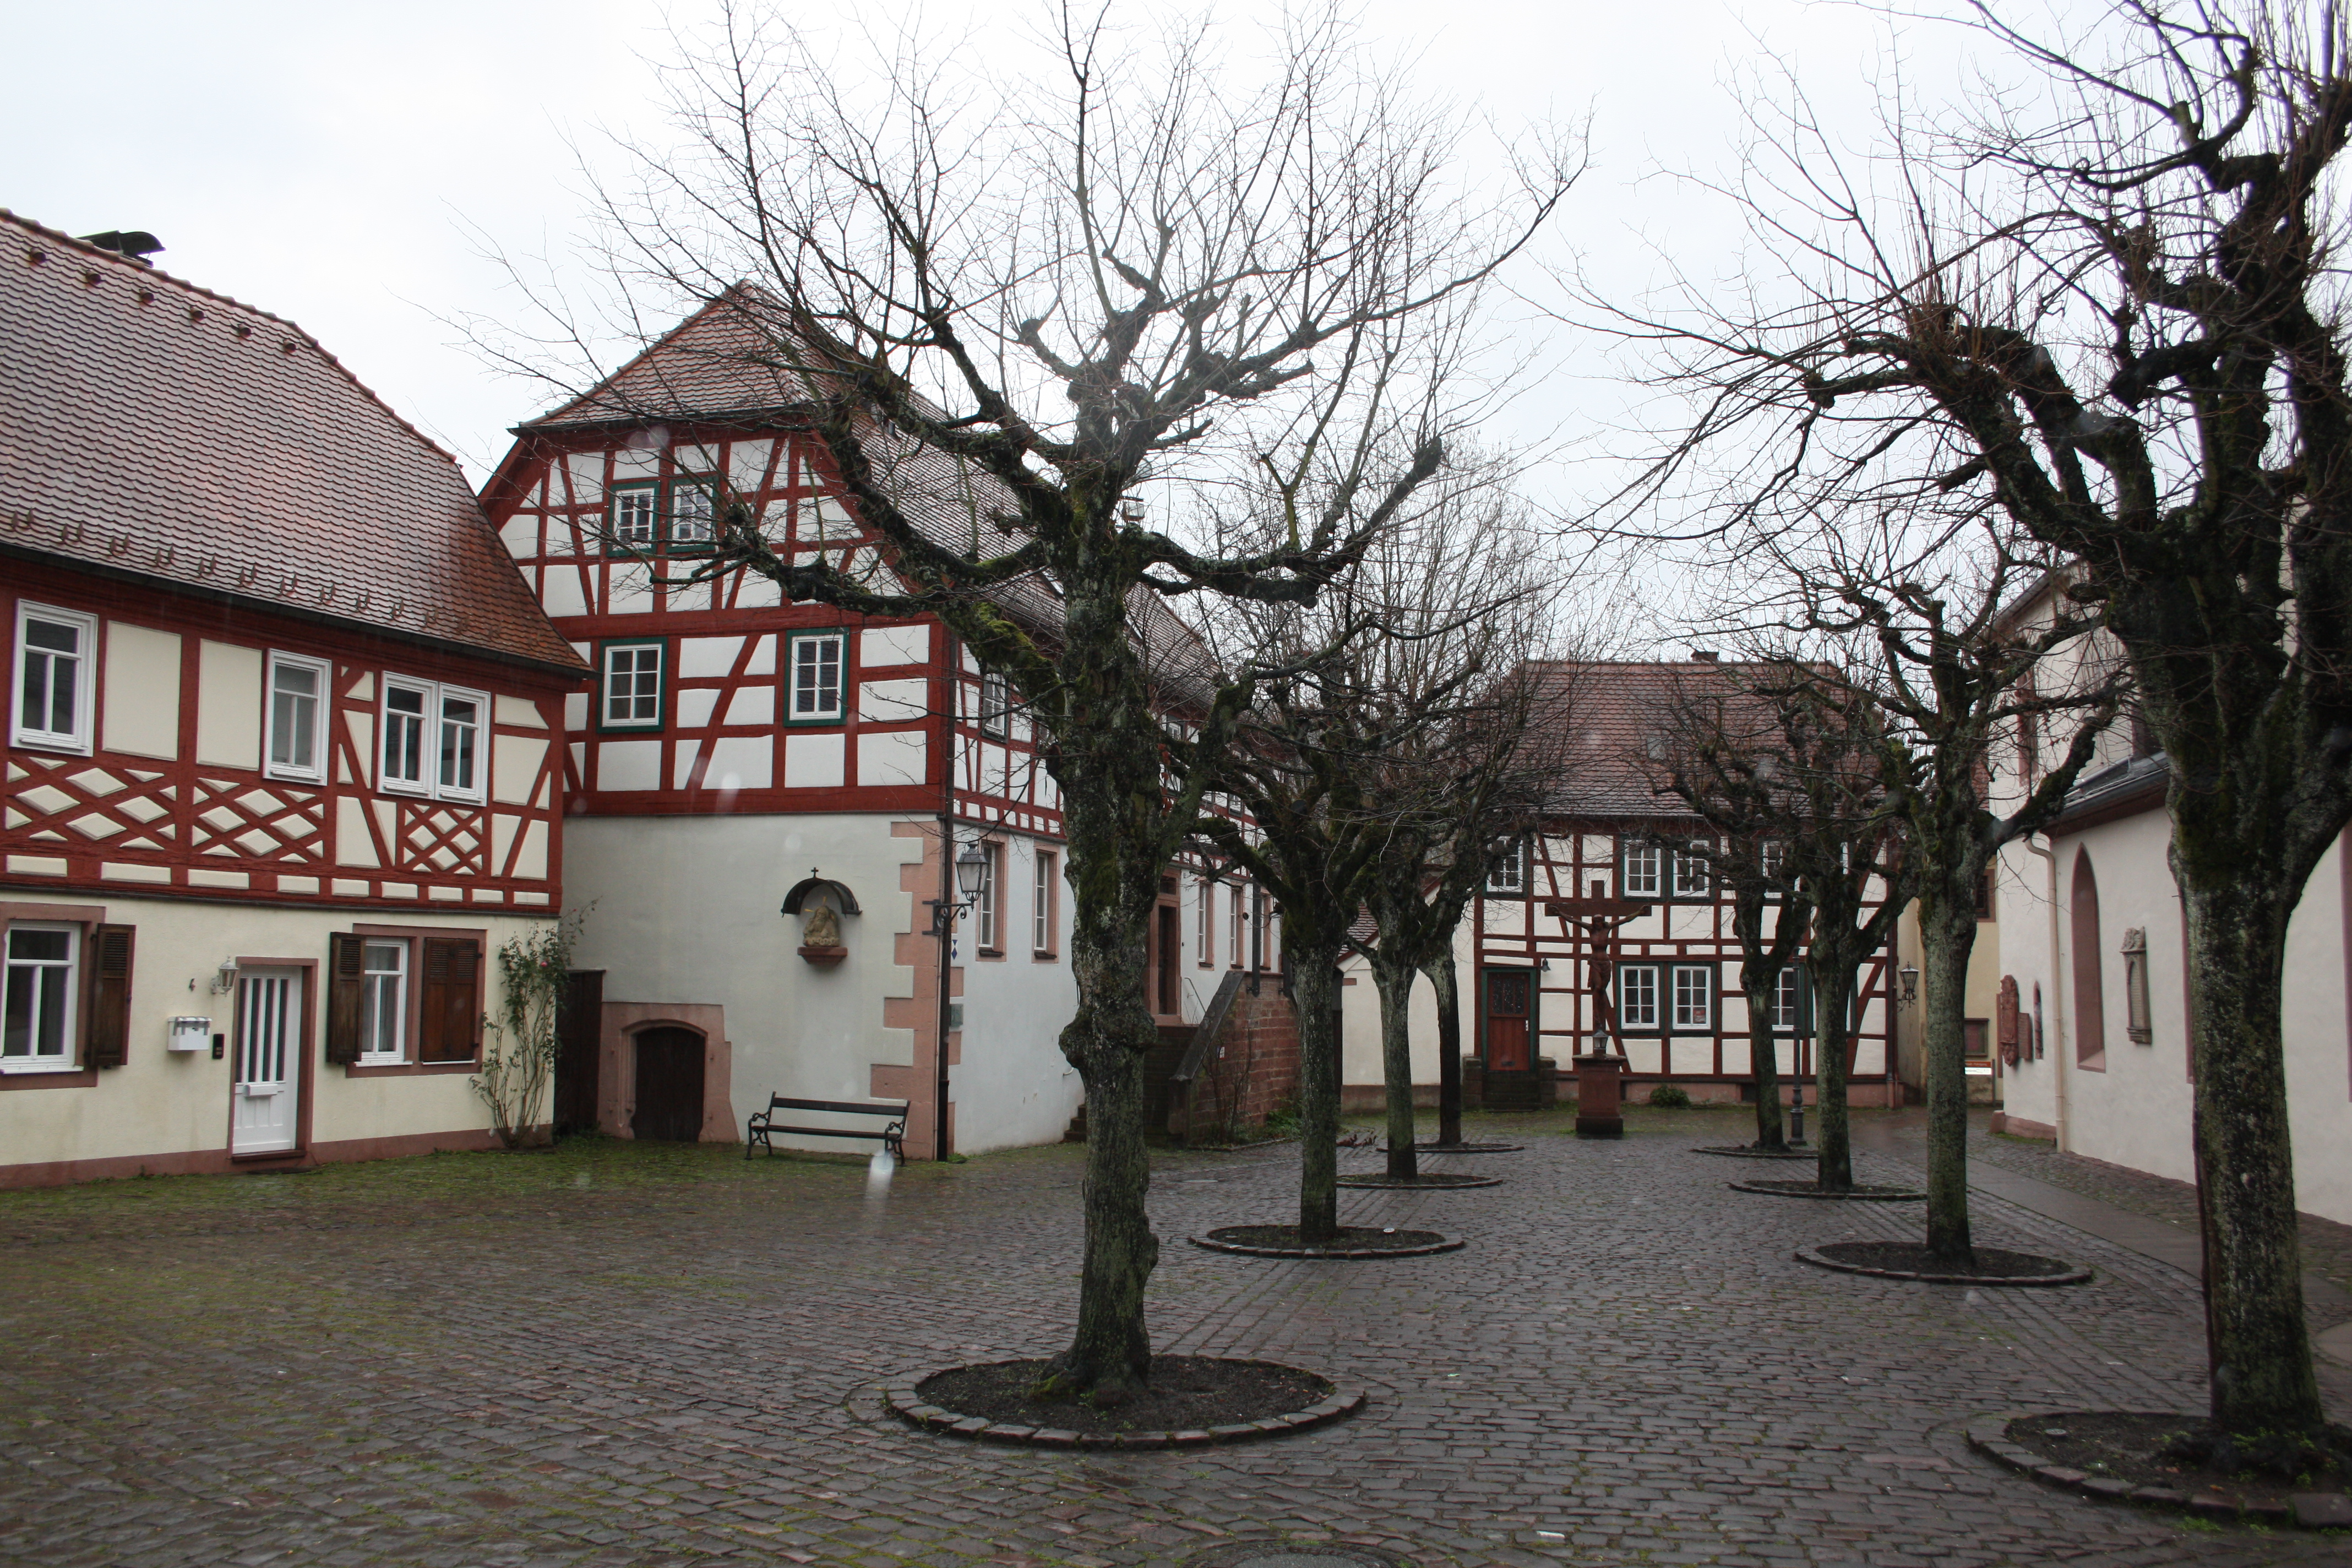 Kirchenhof der Stadtpfarrkirche St Michael in Lohr.
